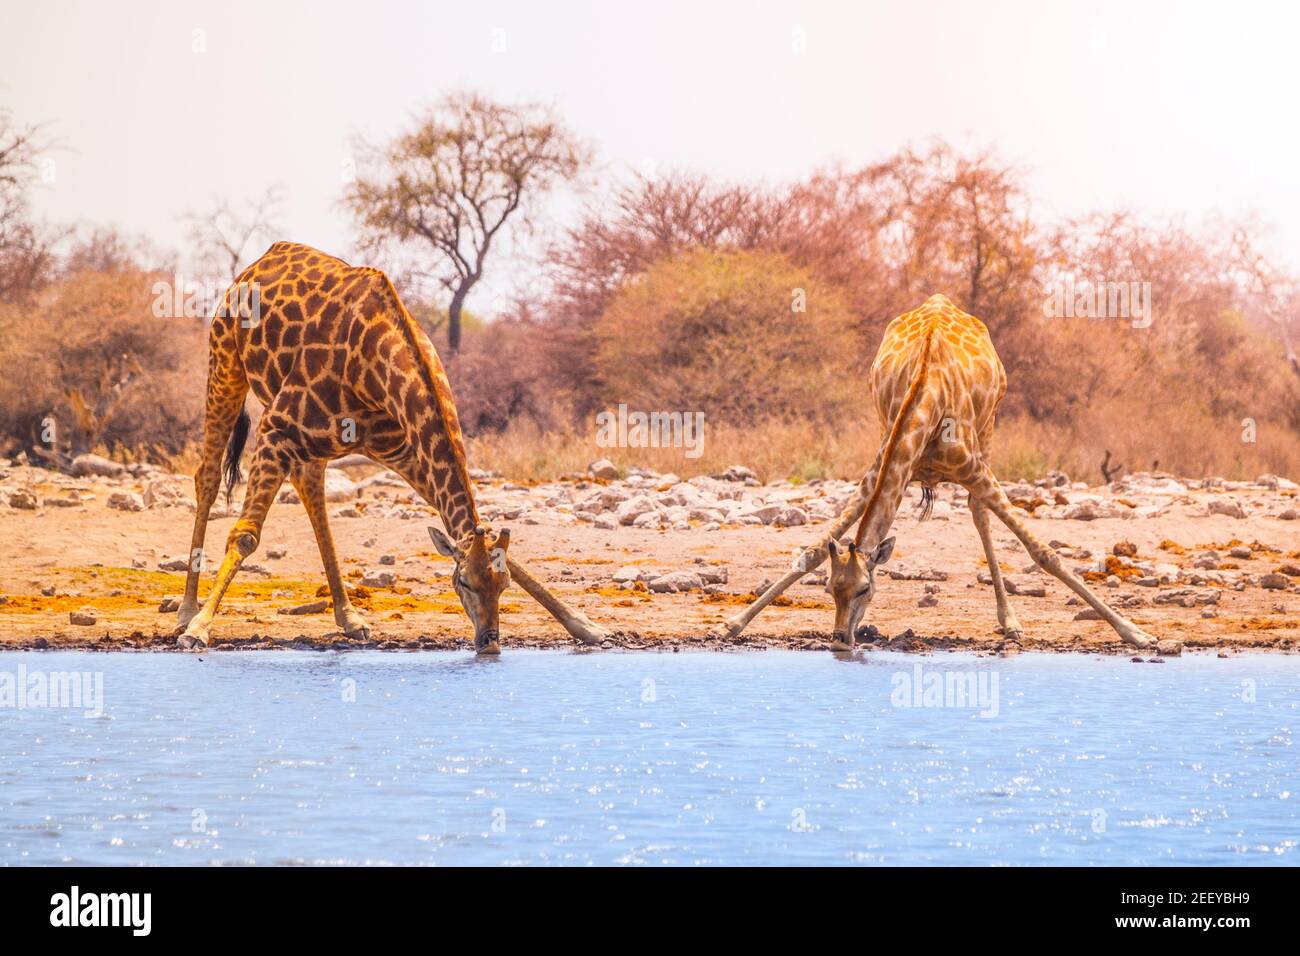 Two giraffes drinking water Stock Photo